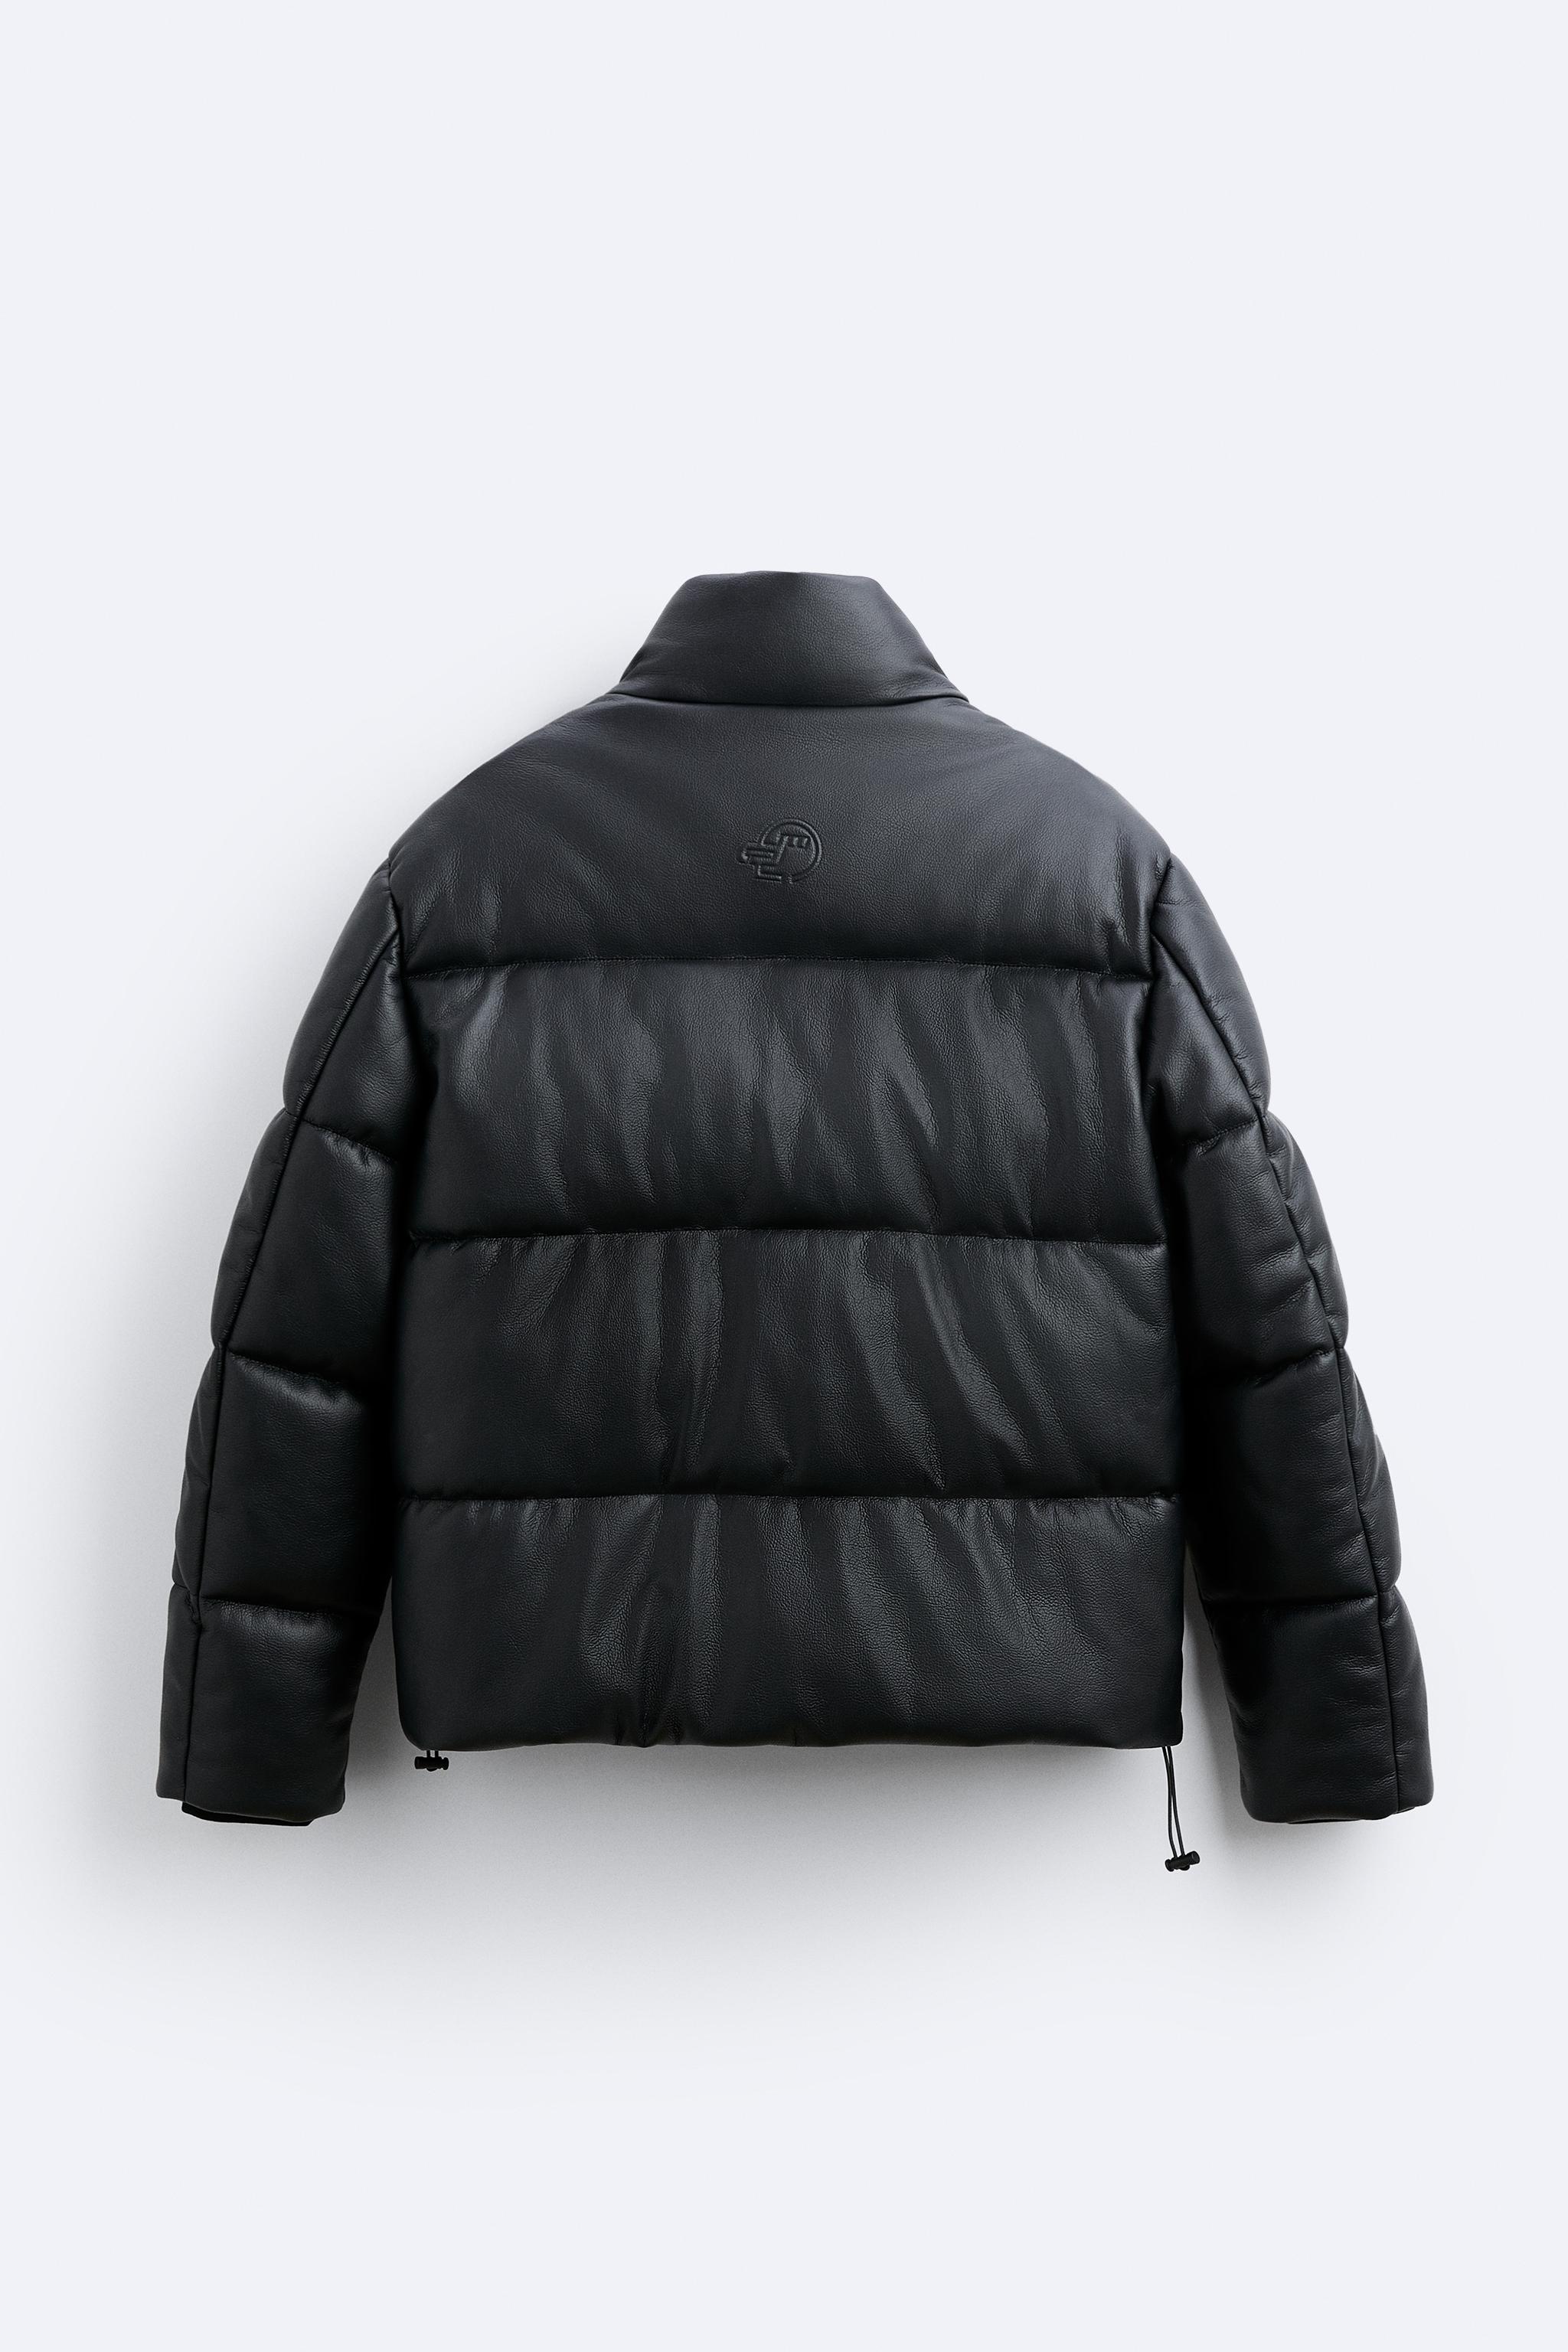 ZARA Faux Leather Puffer Coats & Jackets for Men